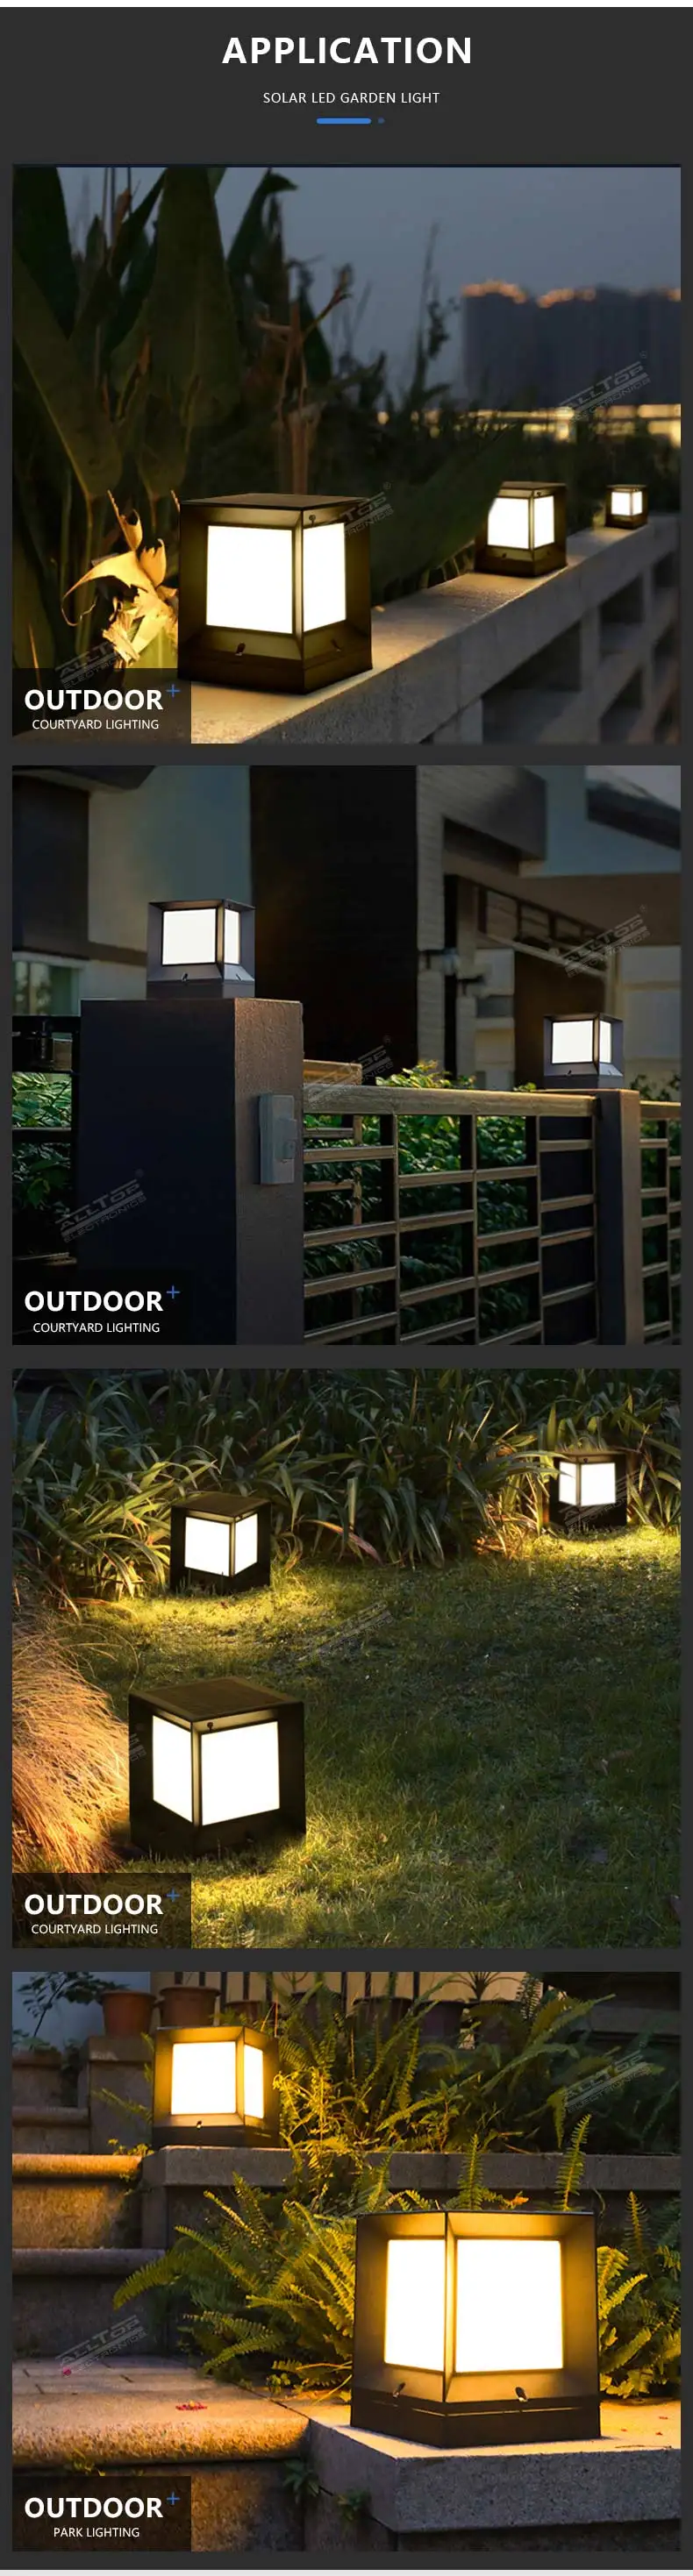 ALLTOP Super brightness double light source garden light outdoor waterproof 10w solar LED garden light